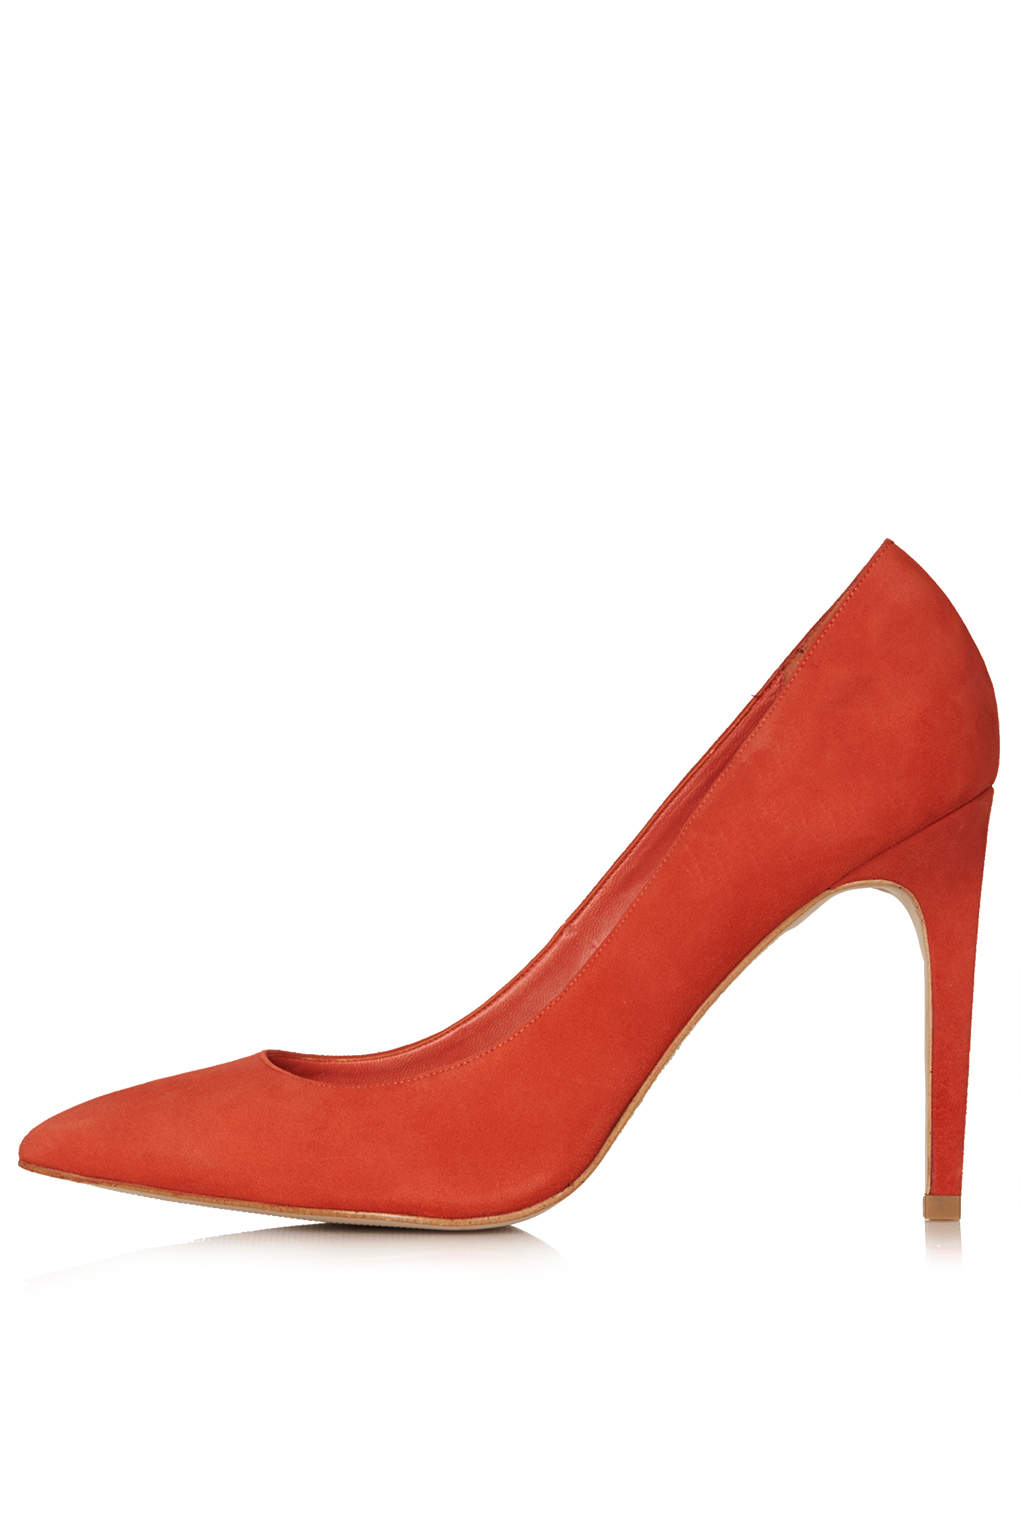 Topshop Womens Glory Suede High Heel Shoes Orange in Orange | Lyst